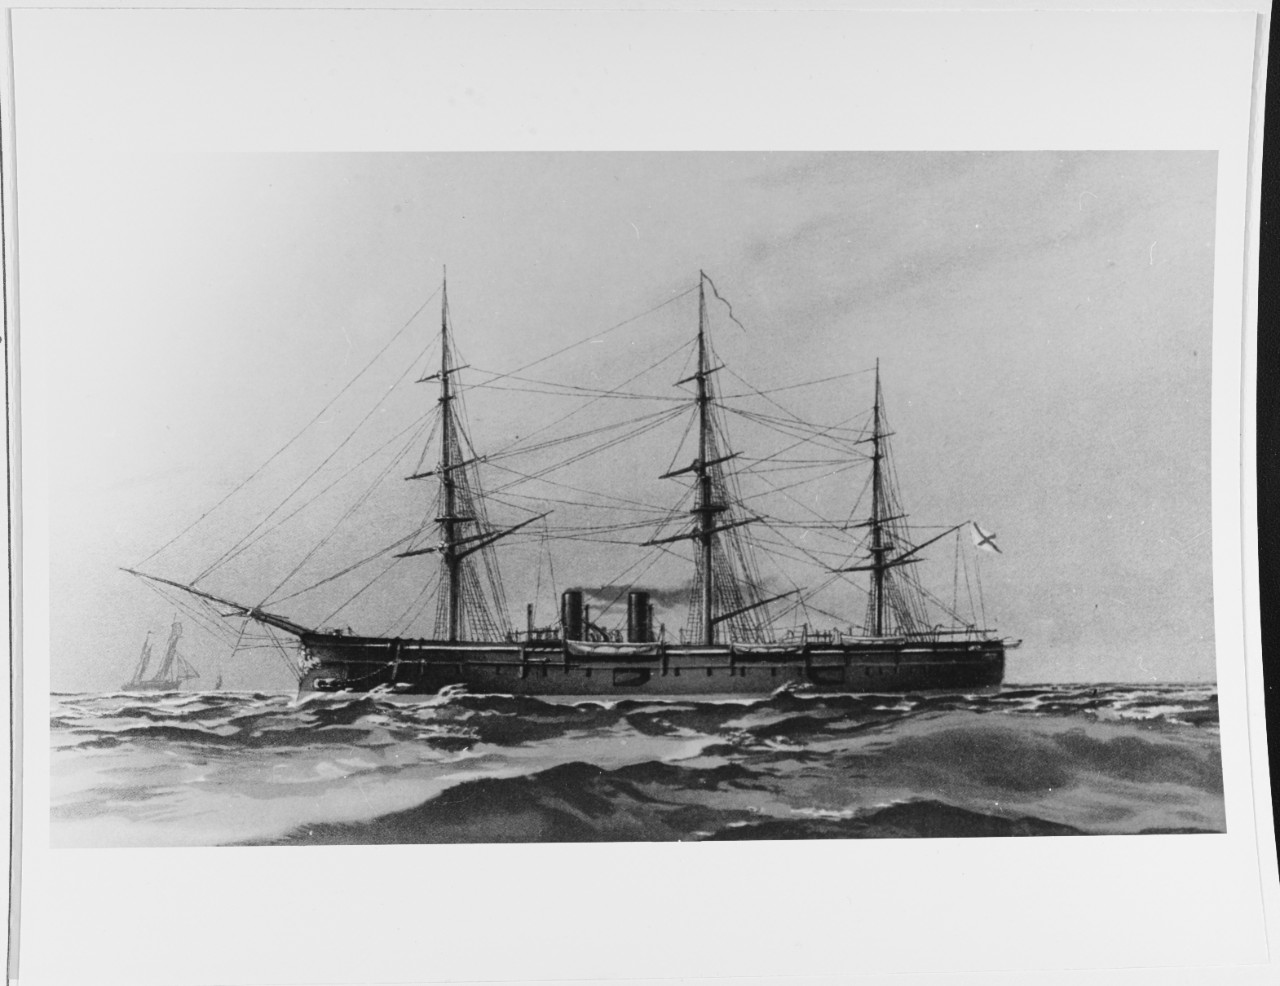 KNIAZ POJARSKI (Russian battleship, 1867)